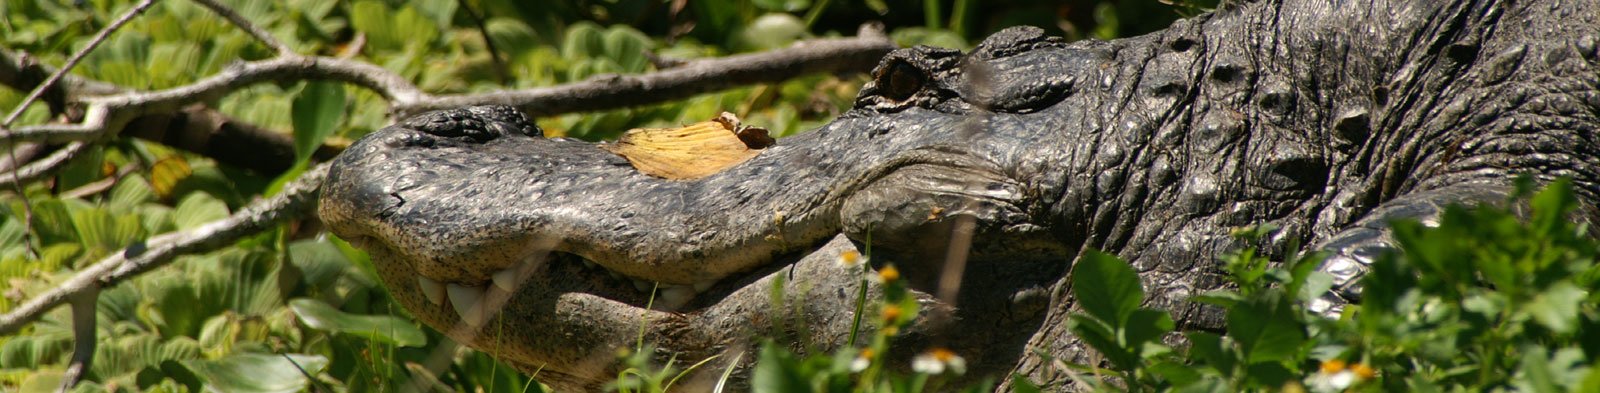 Reisen-Reisefuehrer-reisetipps-travel-guide-book-tour-usa-florida-naples-bird rookery swamp-alligators